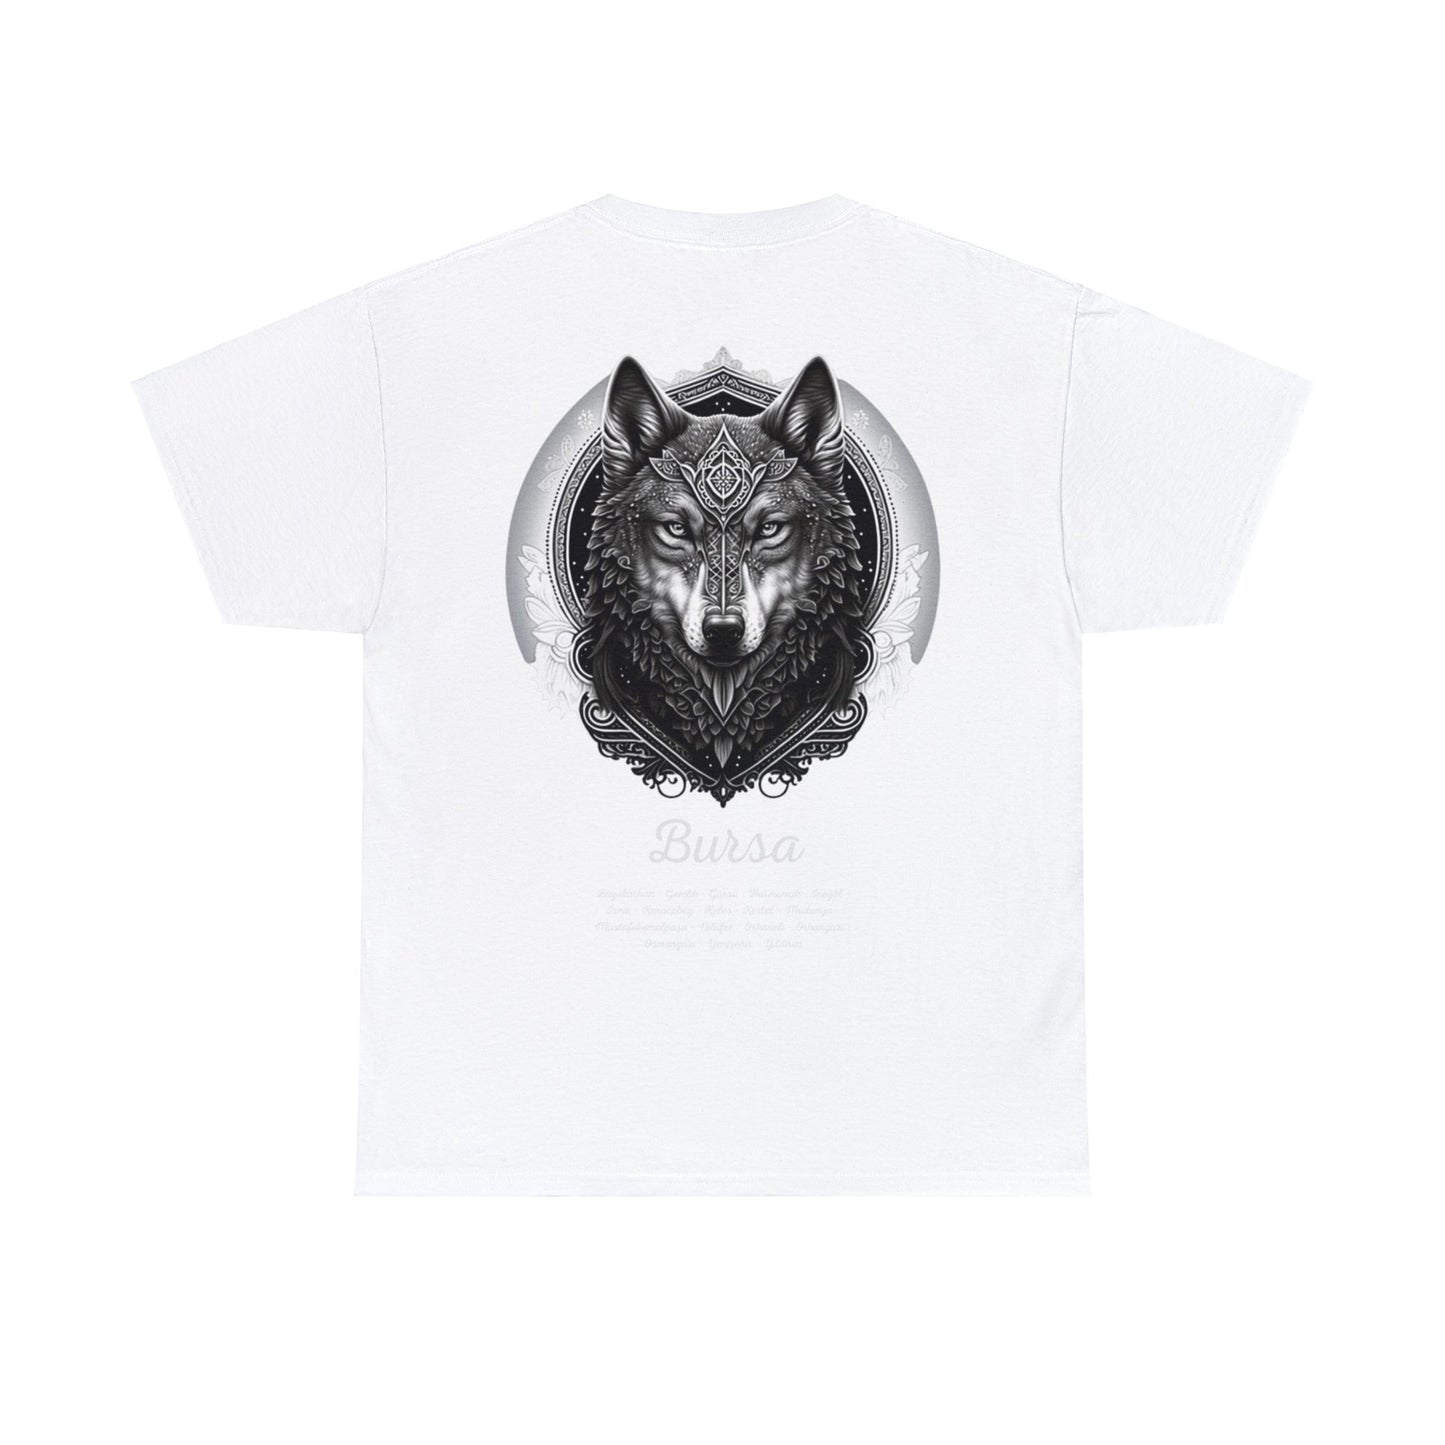 Kurt - 16 Bursa - T-Shirt - Back Print - Black/White